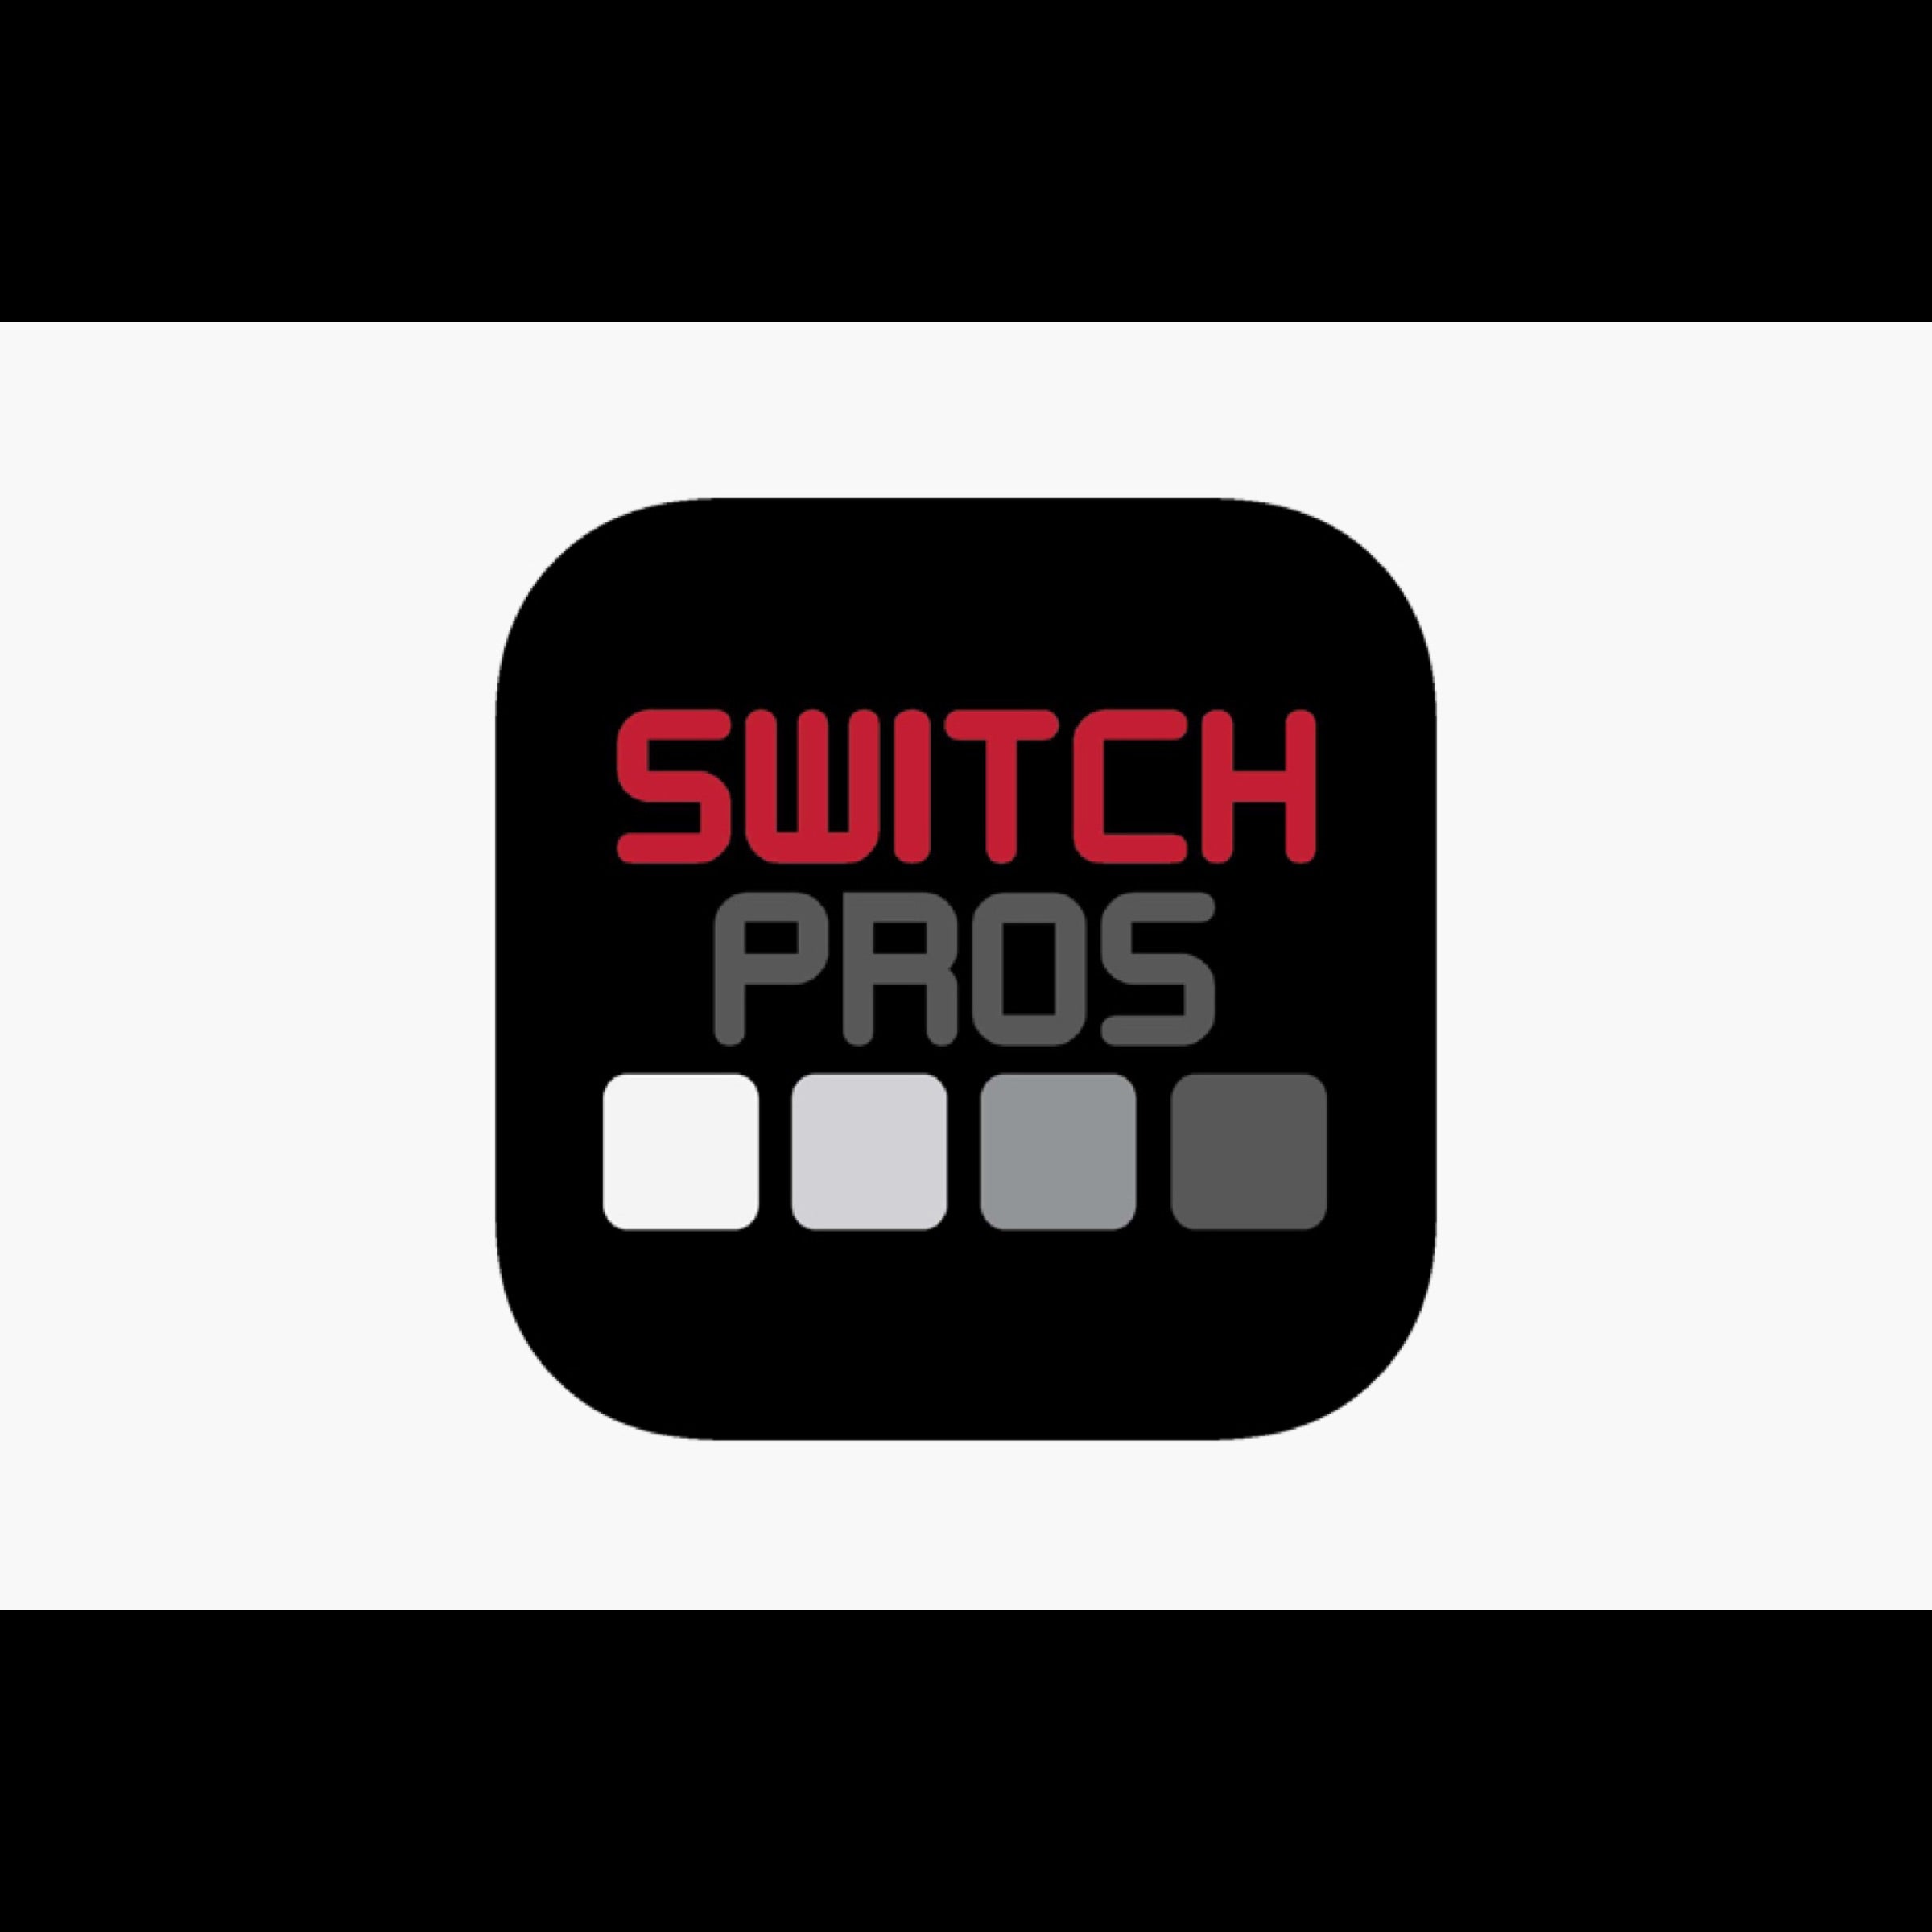 Switch Pros logo with white background